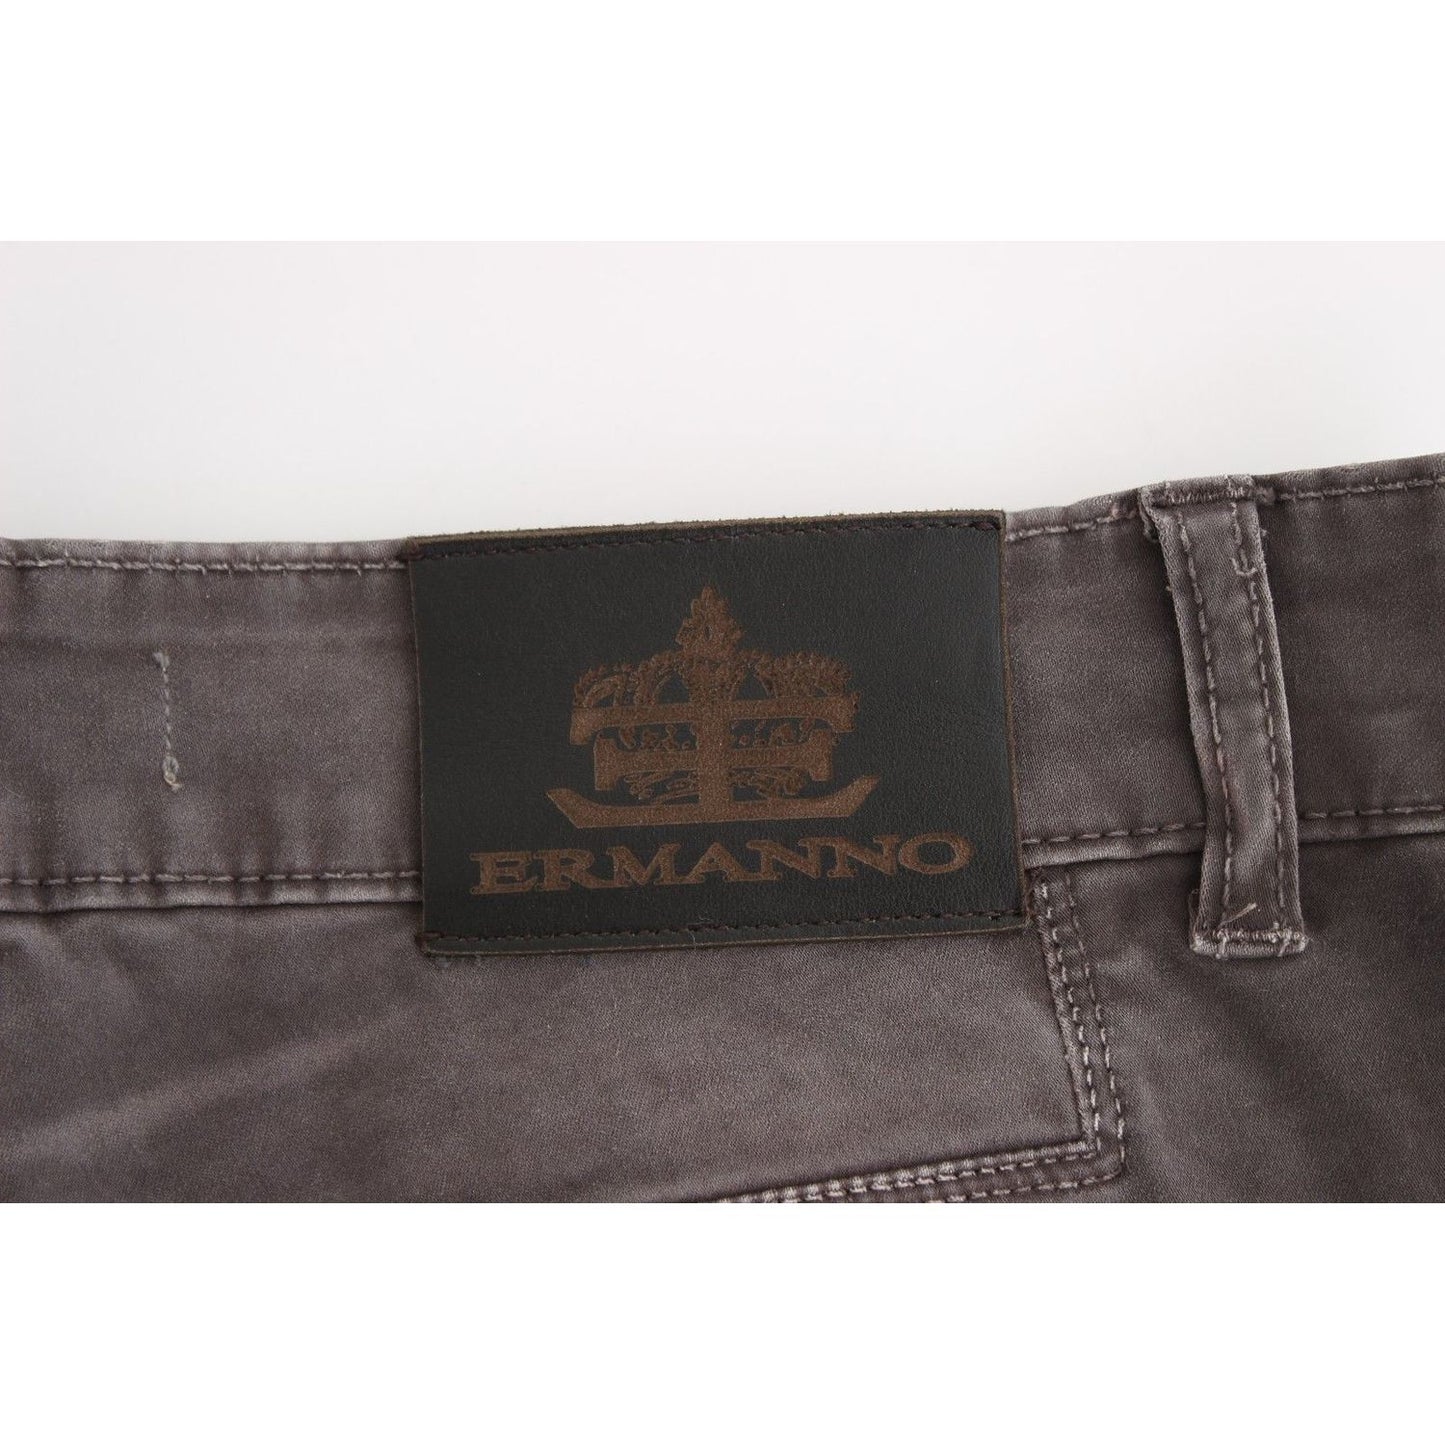 Ermanno Scervino Chic Gray Slim Leg Jeans - Elegance Meets Comfort gray-slim-jeans-denim-pants-skinny-leg-stretch-1 37416-gray-slim-jeans-denim-pants-skinny-leg-stretch-2-5.jpg